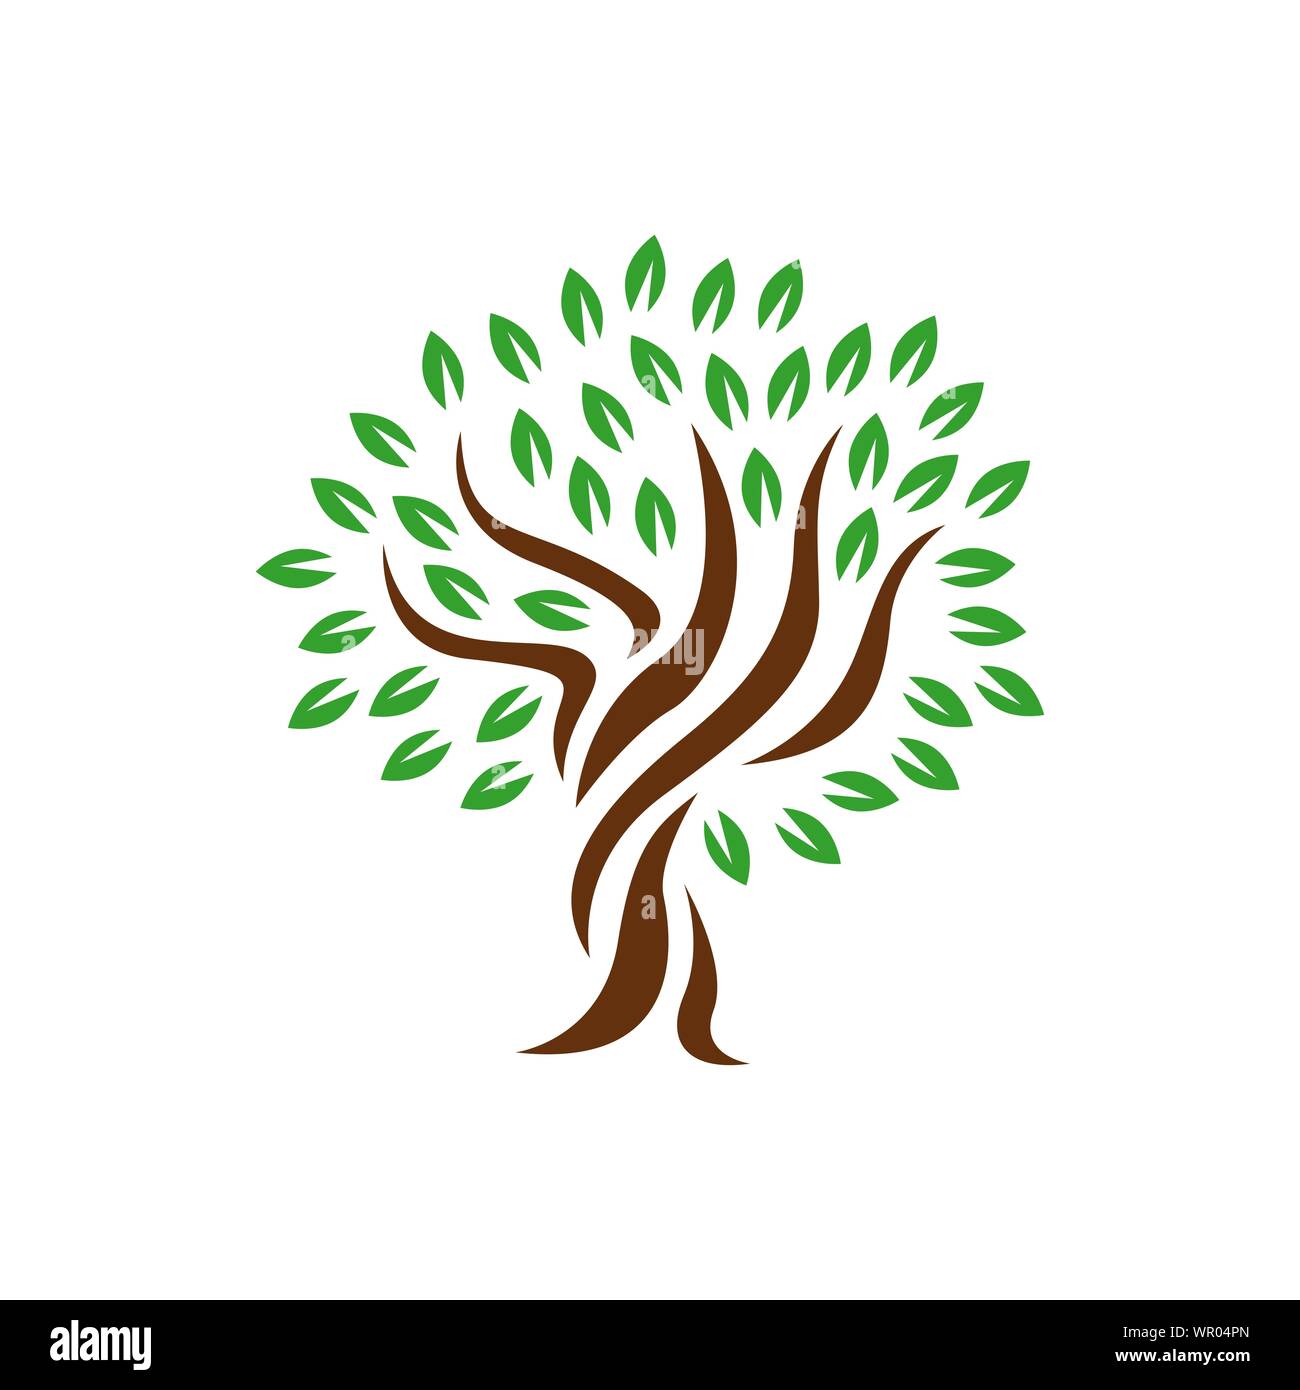 Einfache Silhouette des Baumes logo Vektorgrafiken Illustrationen Stock Vektor